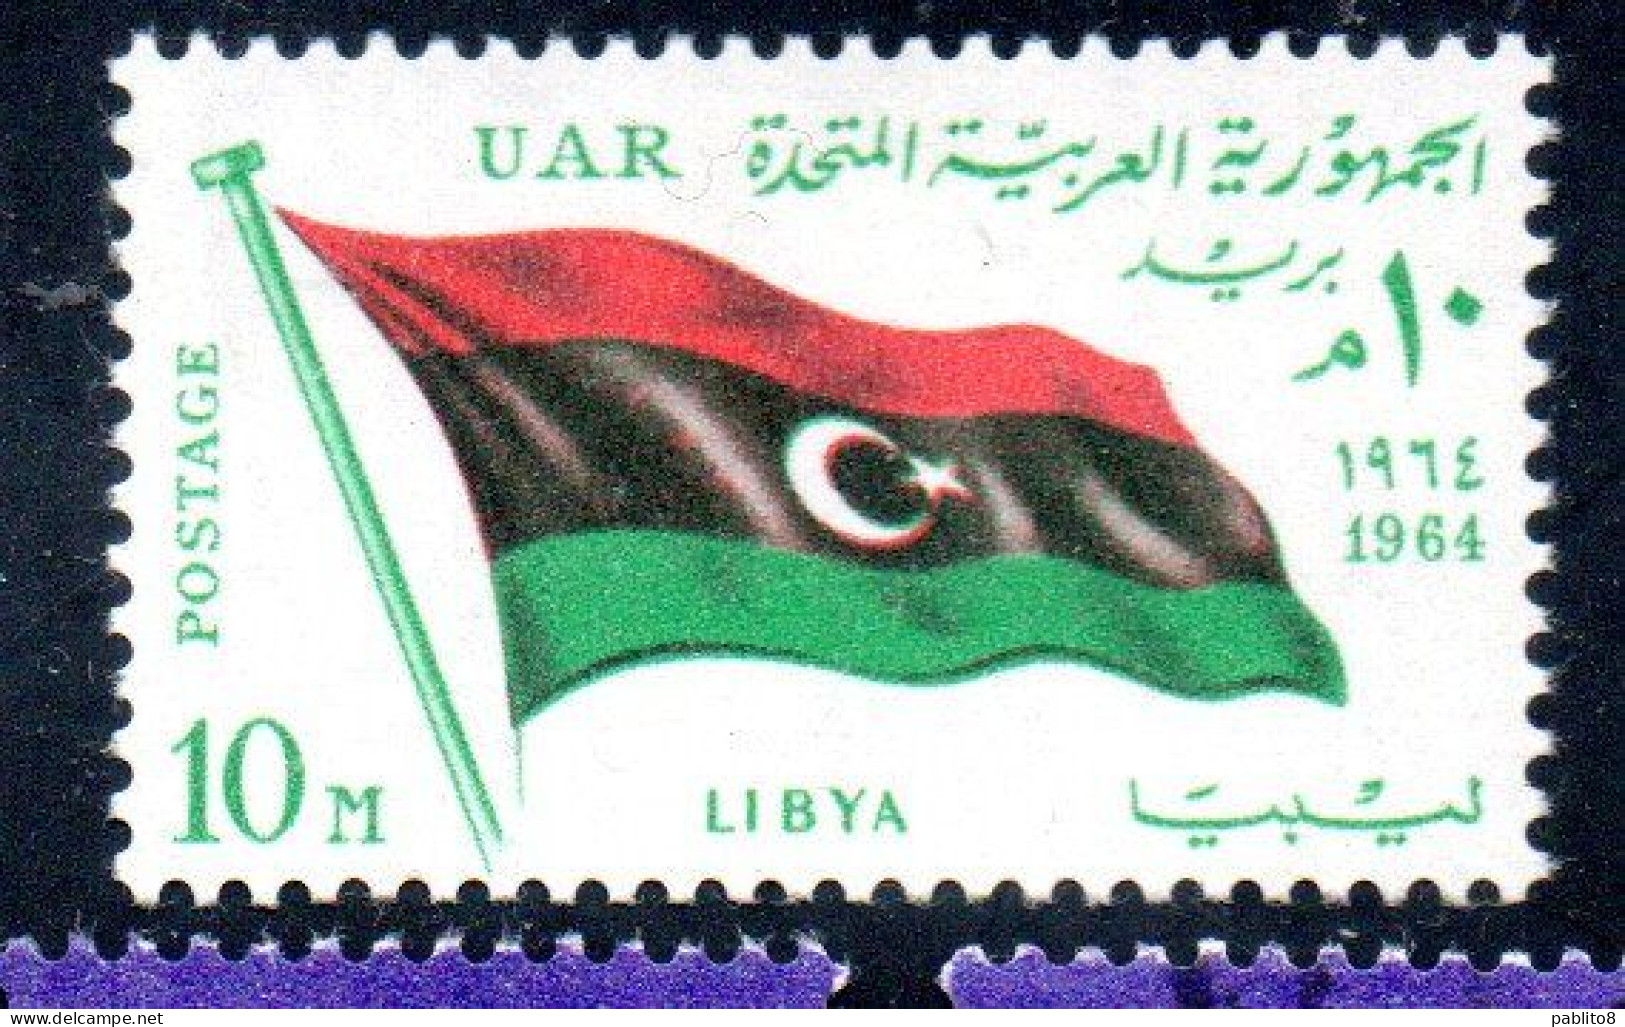 UAR EGYPT EGITTO 1964 SECOND MEETING OF HEADS STATE ARAB LEAGUE FLAG OF LIBYA 10m  MH - Ungebraucht